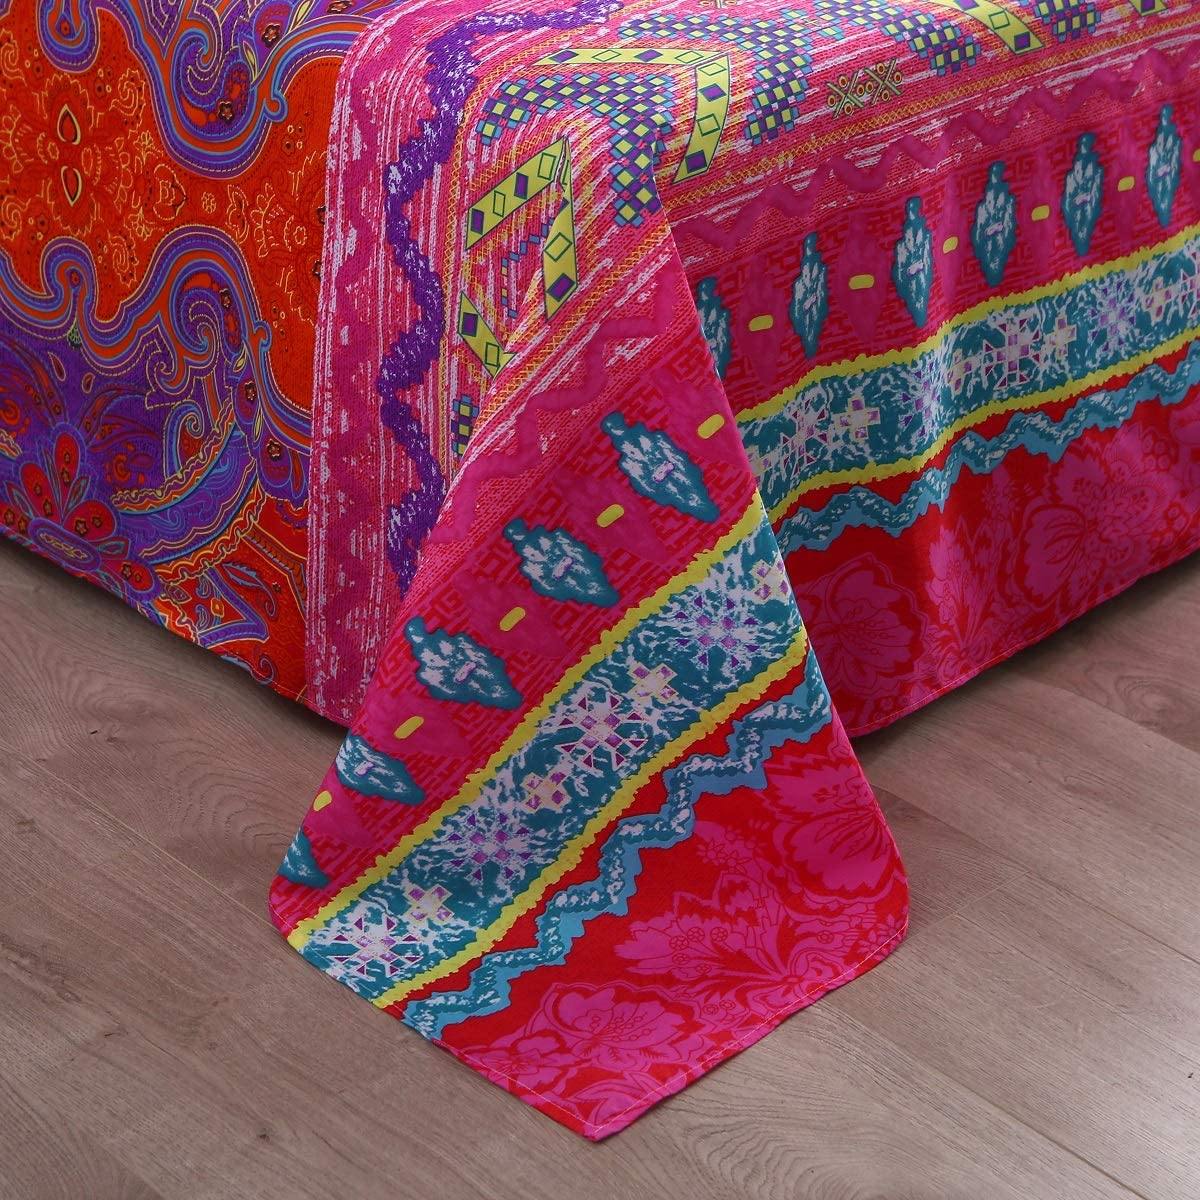 WONGS BEDDING Bohemian Style Sheet Set - Wongs bedding